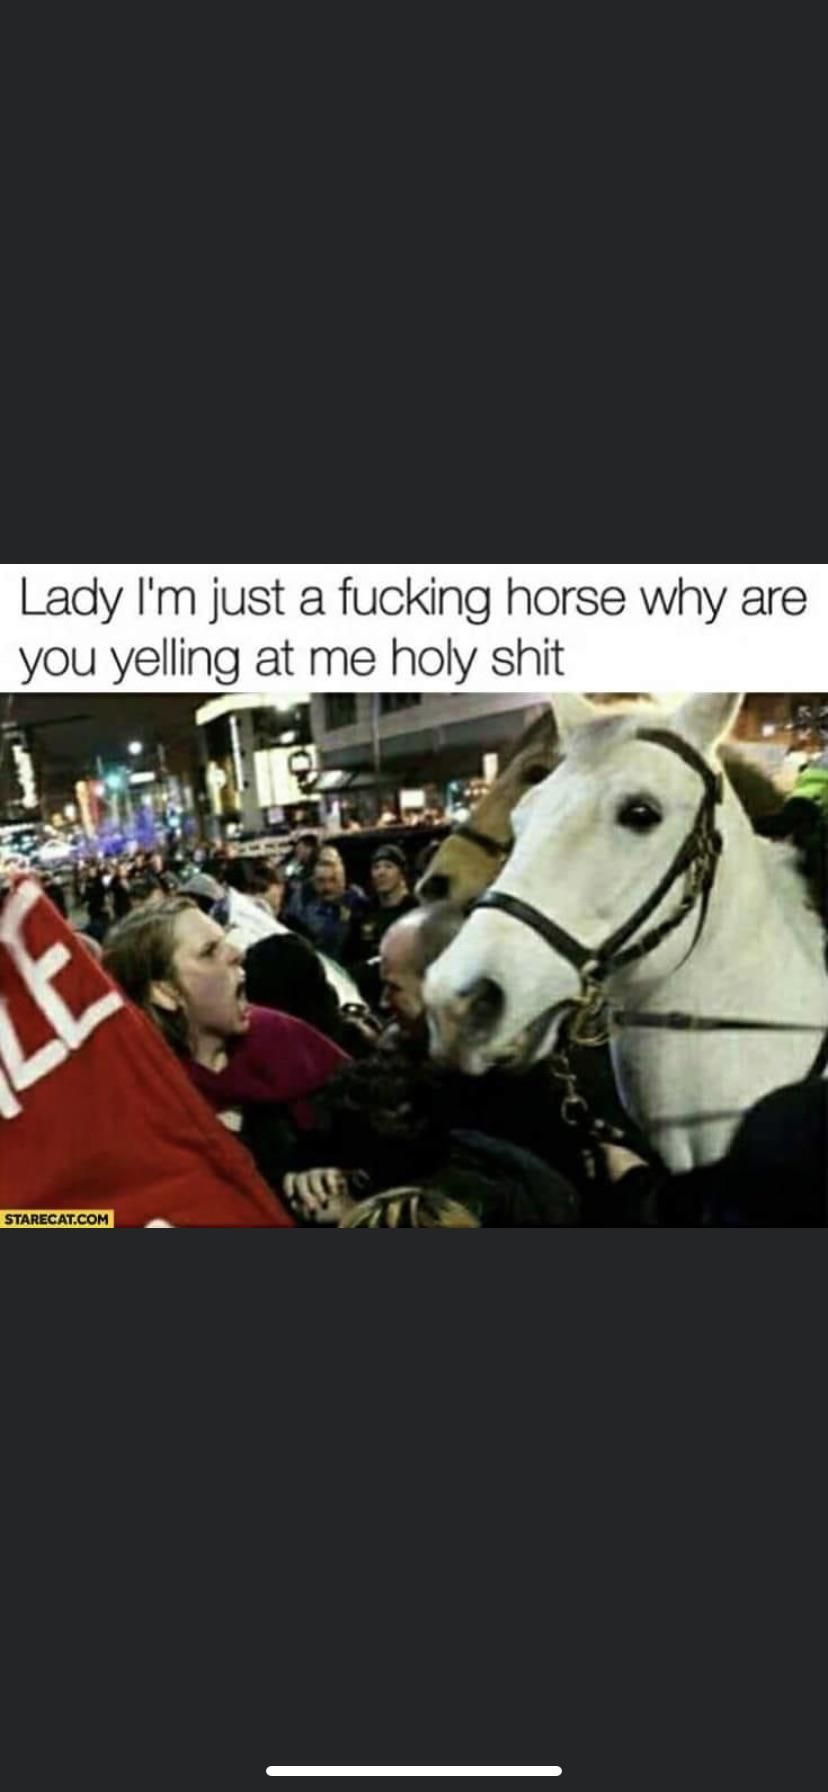 That poor goddamn horse